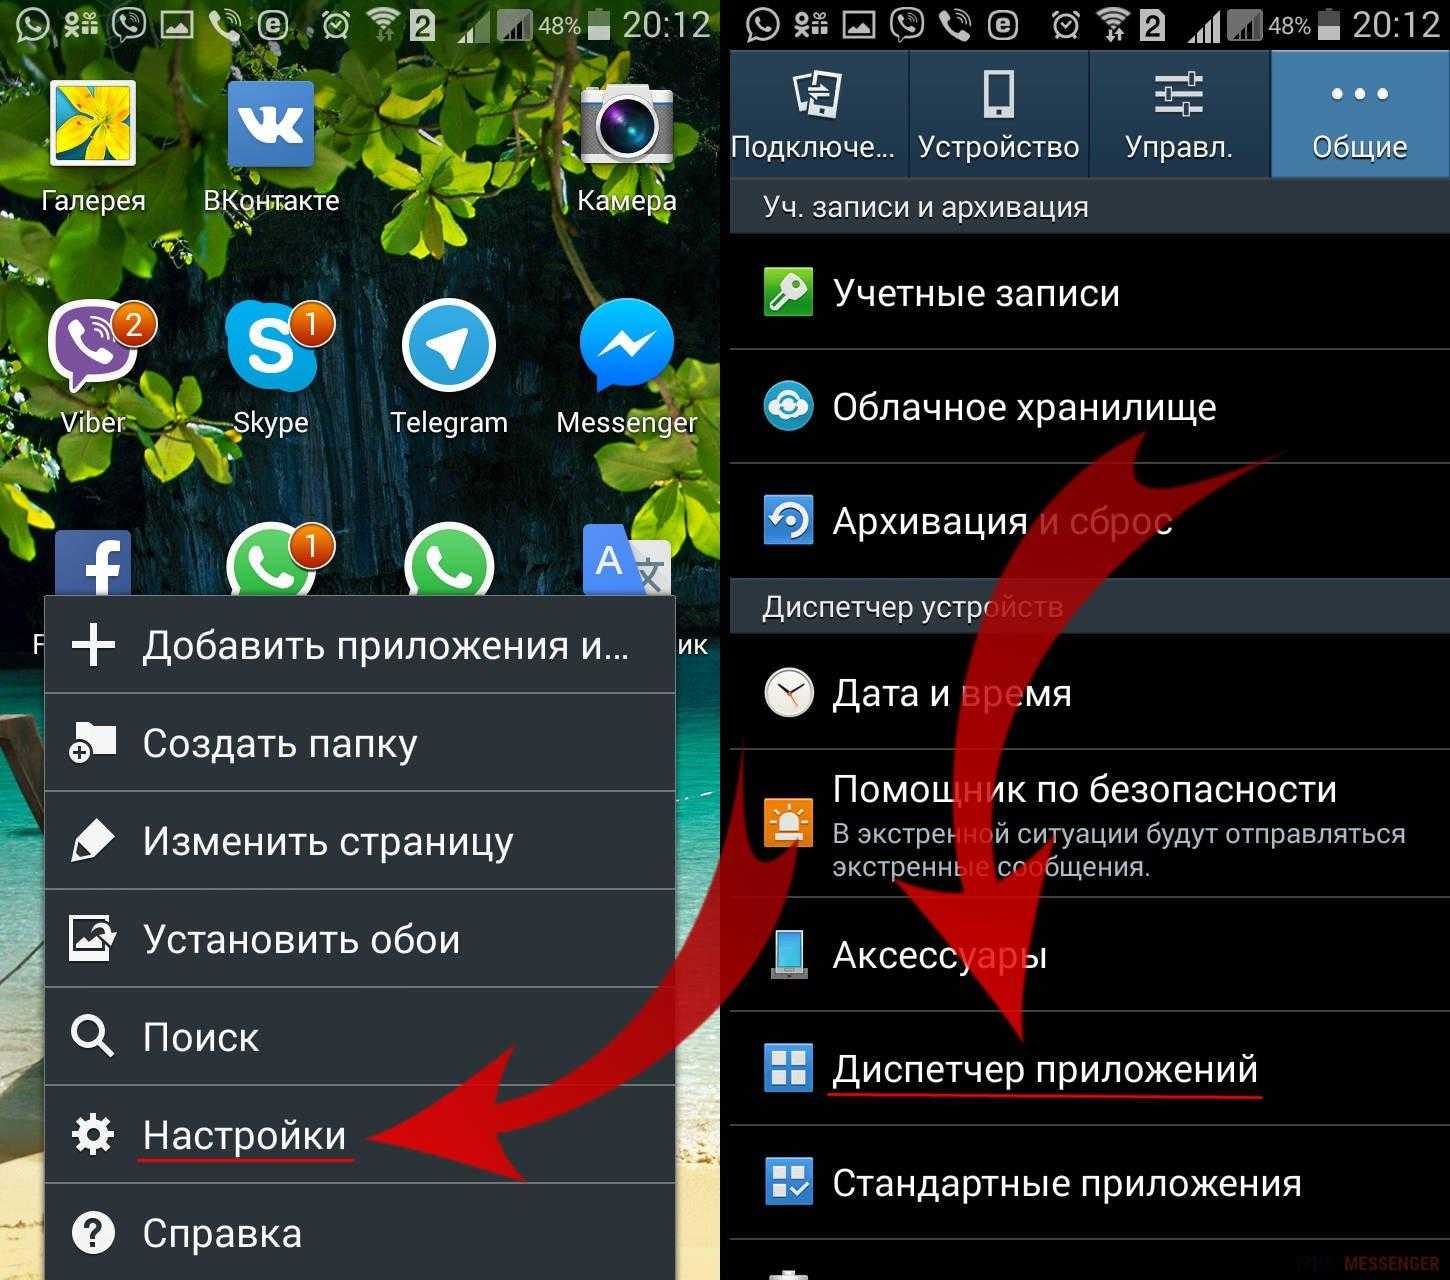 Телеграмм как перевести на русский на андроиде телефоне самсунг фото 53